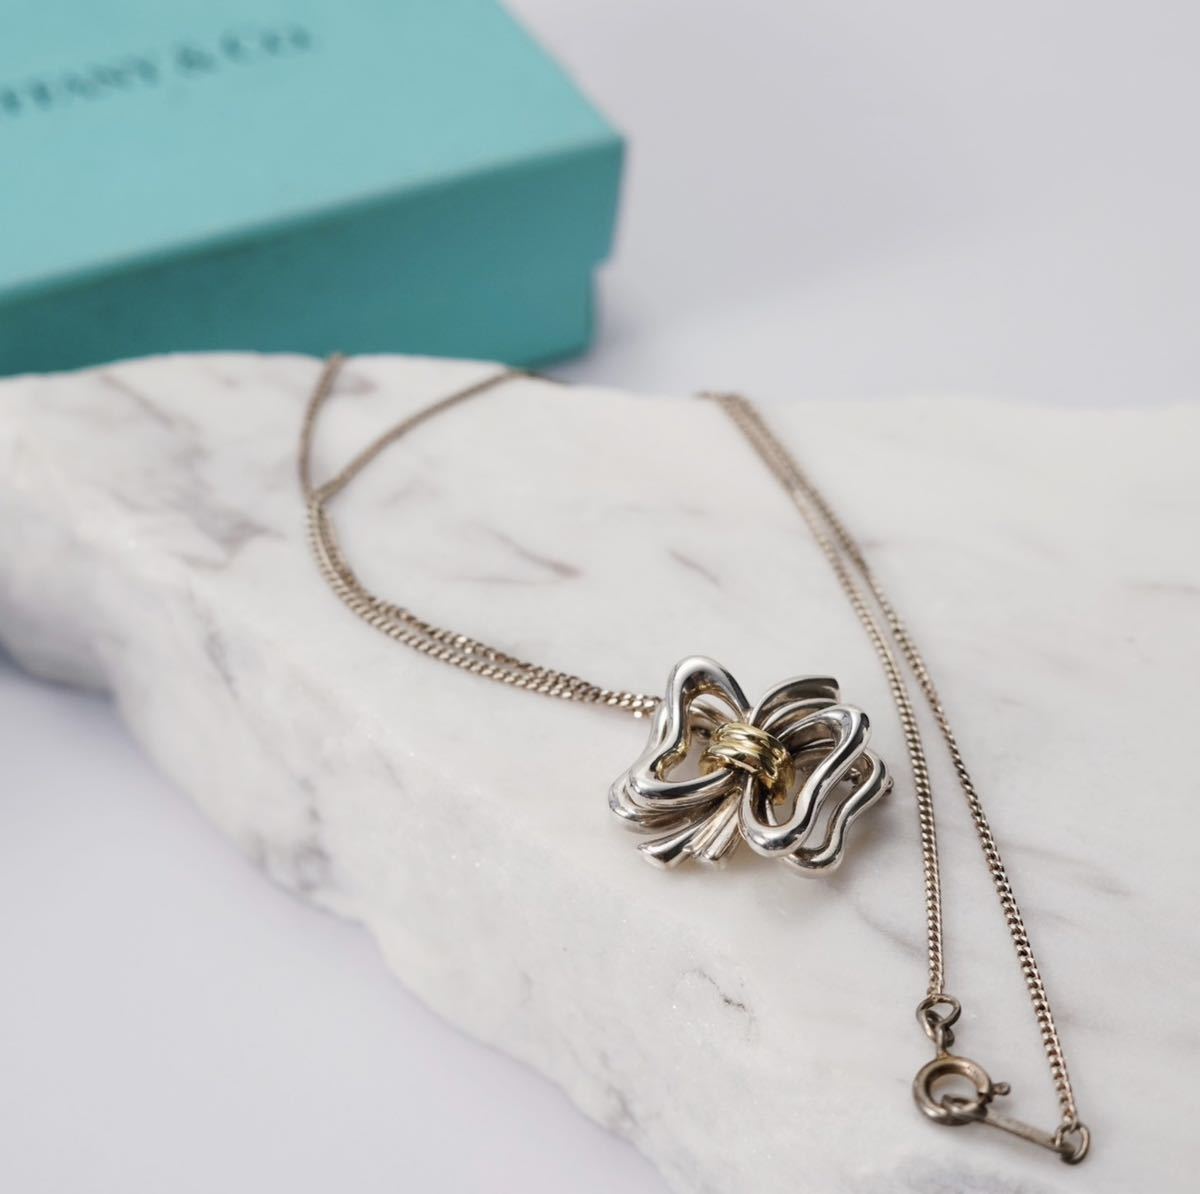 【 Tiffany 】silver 925 14k necklace top ネックレス ティファニー TIFFANY&Co シルバー リボン レディース 刻印 ヴィンテージ vintage